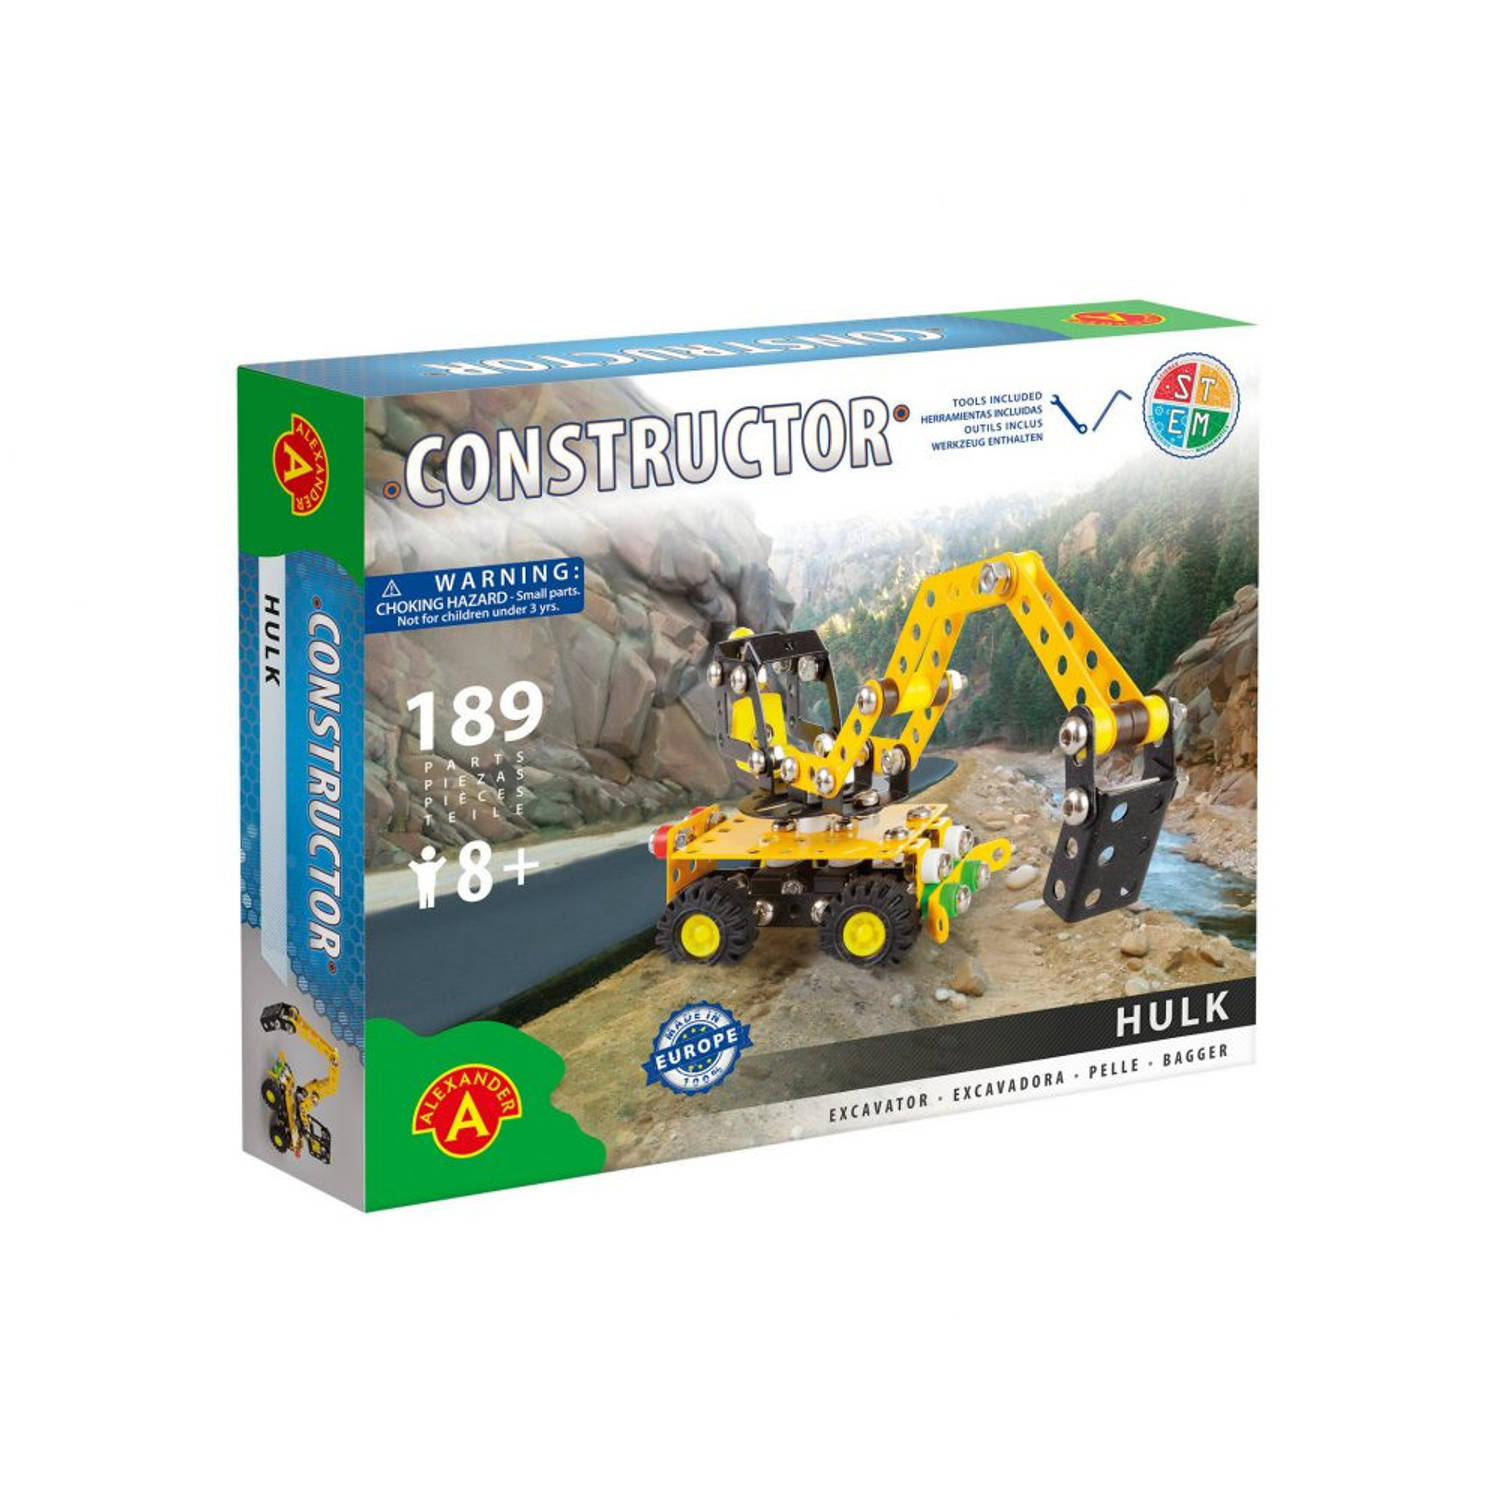 Alexander Toys Constructor - Hulk (Excavator) - 189pcs